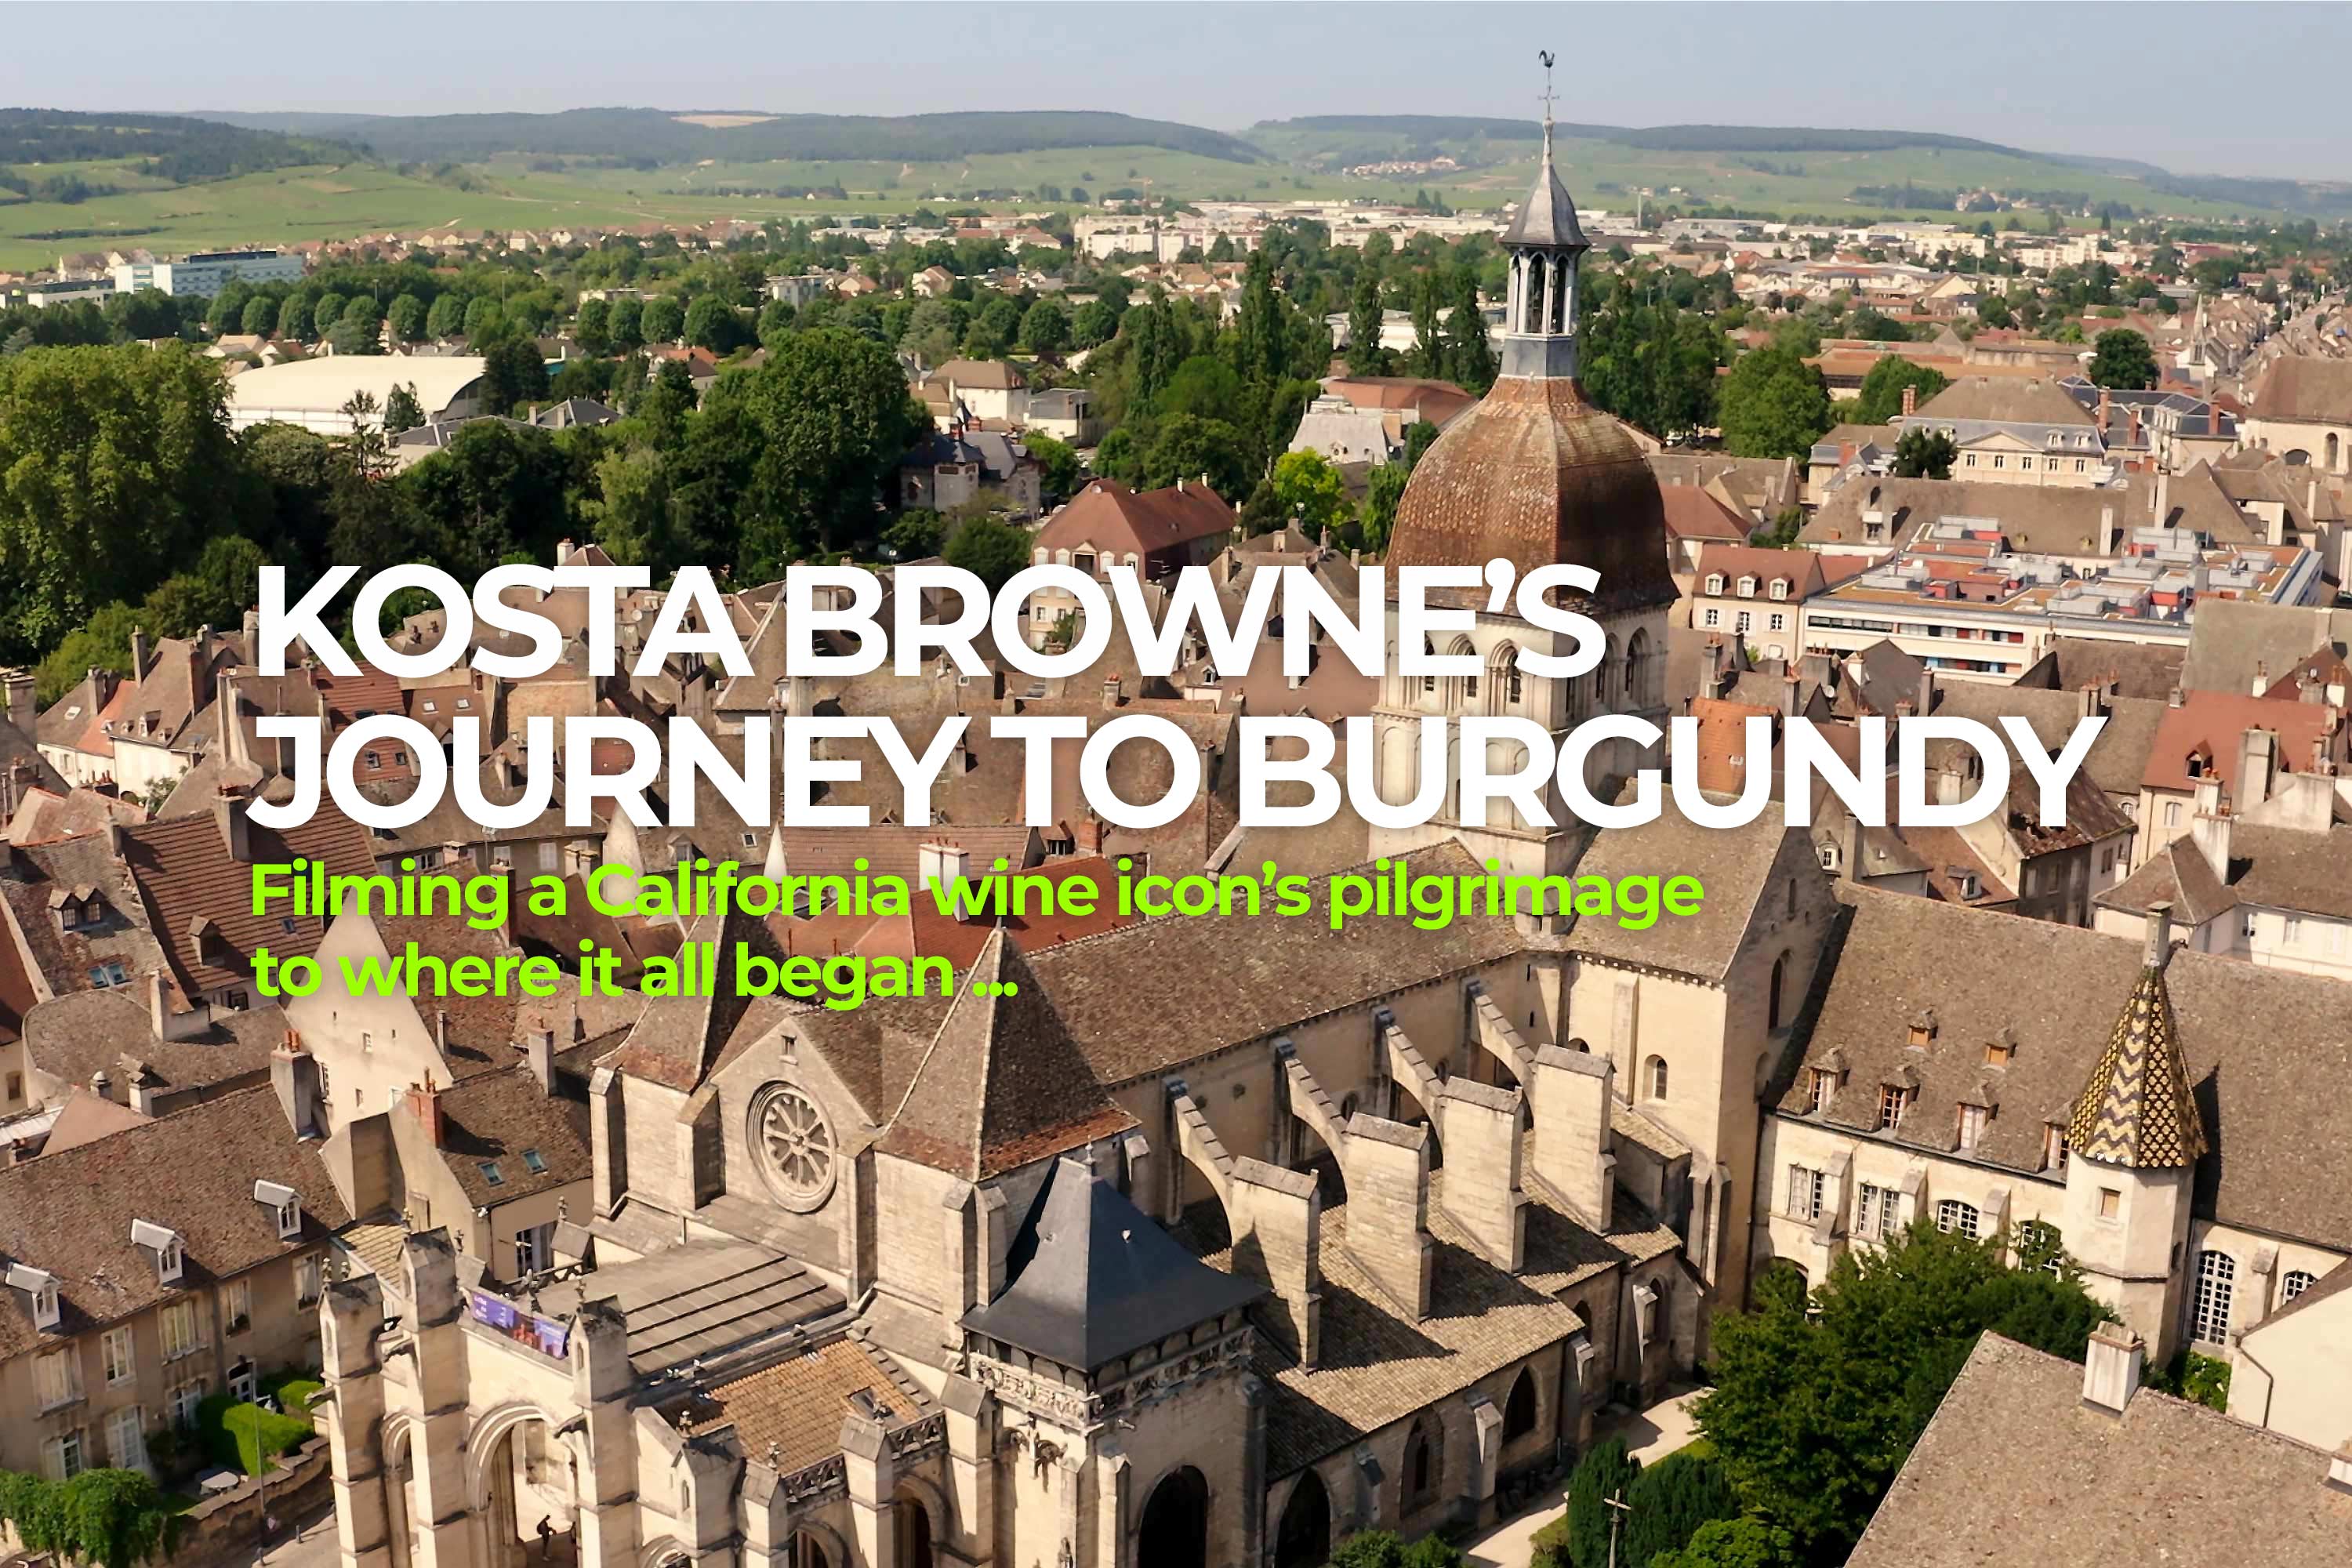 Short film A Journey To Burgundy for Kosta Browne